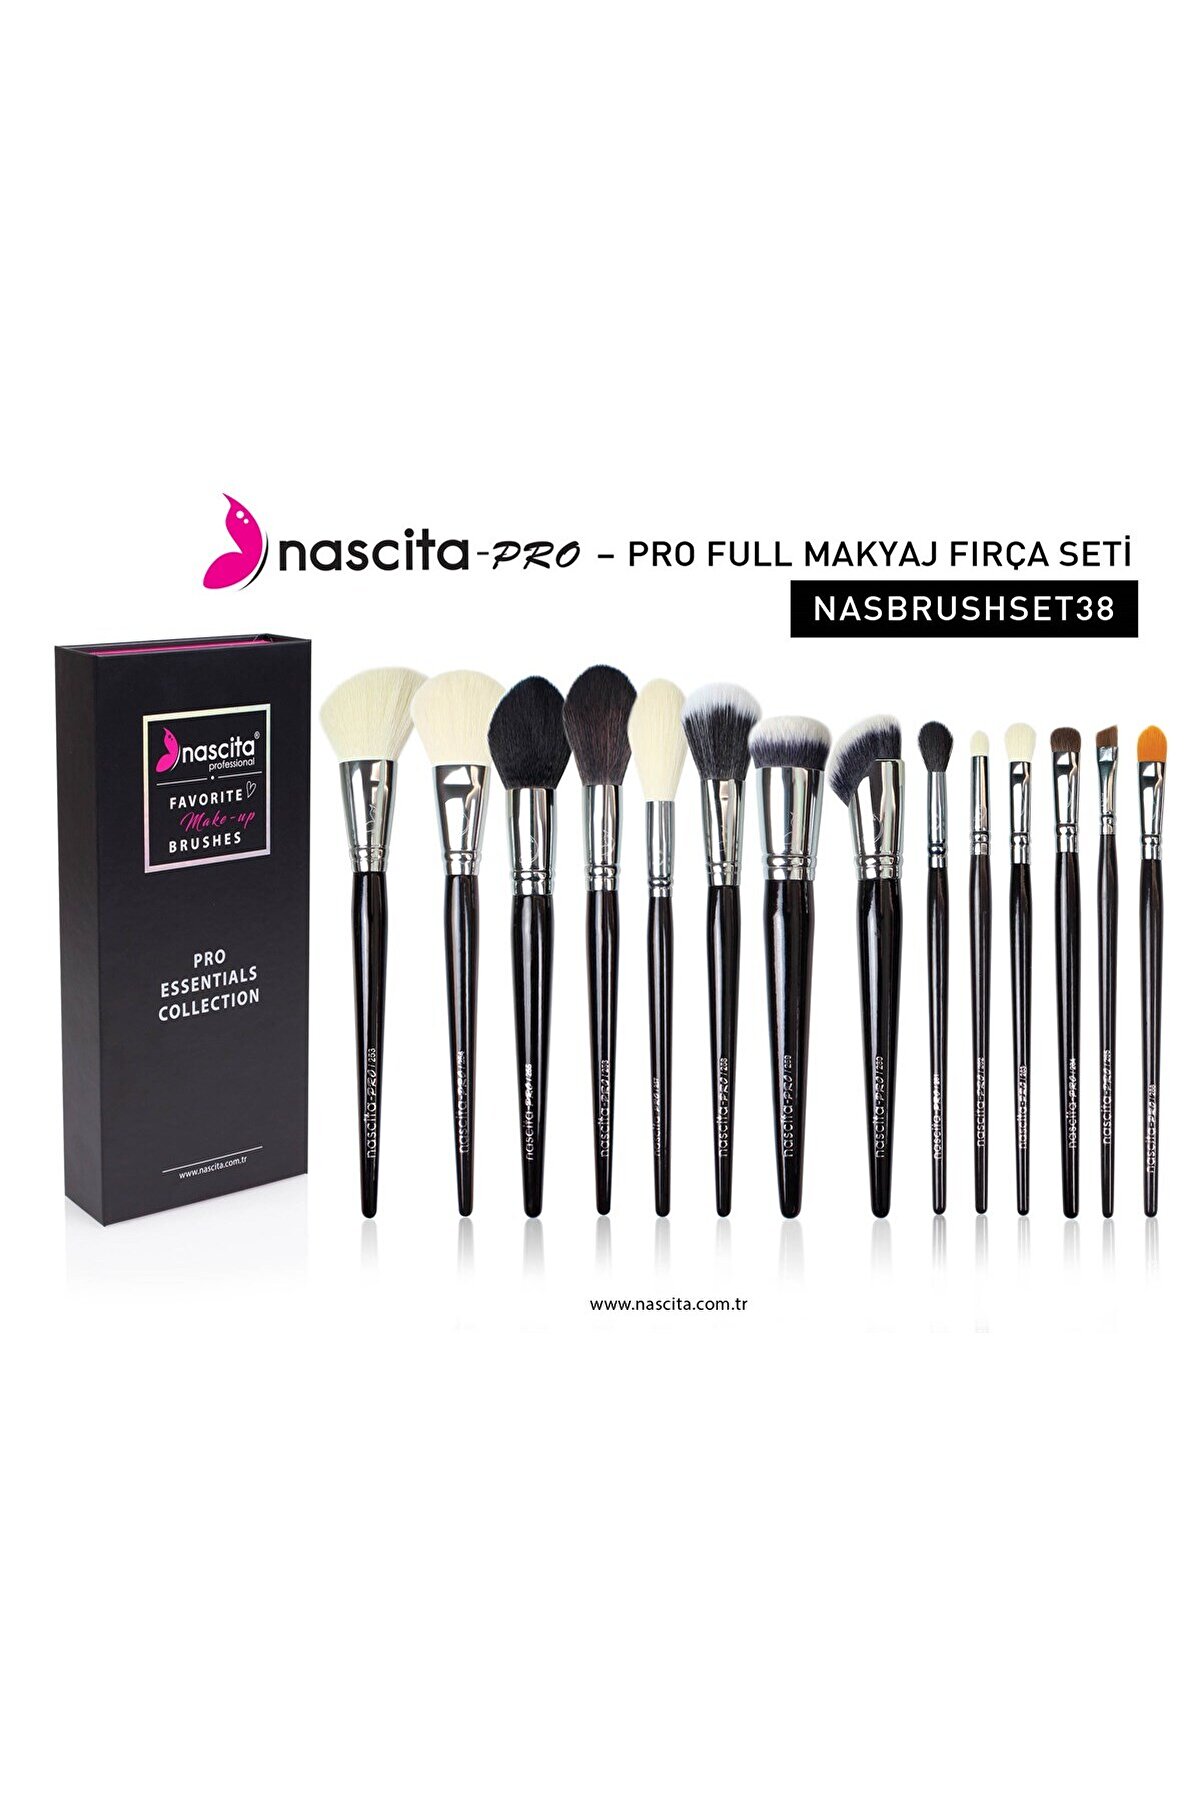 Nascita Pro Essentials Collection Makyaj Fırça Seti Full Nasbrushset38